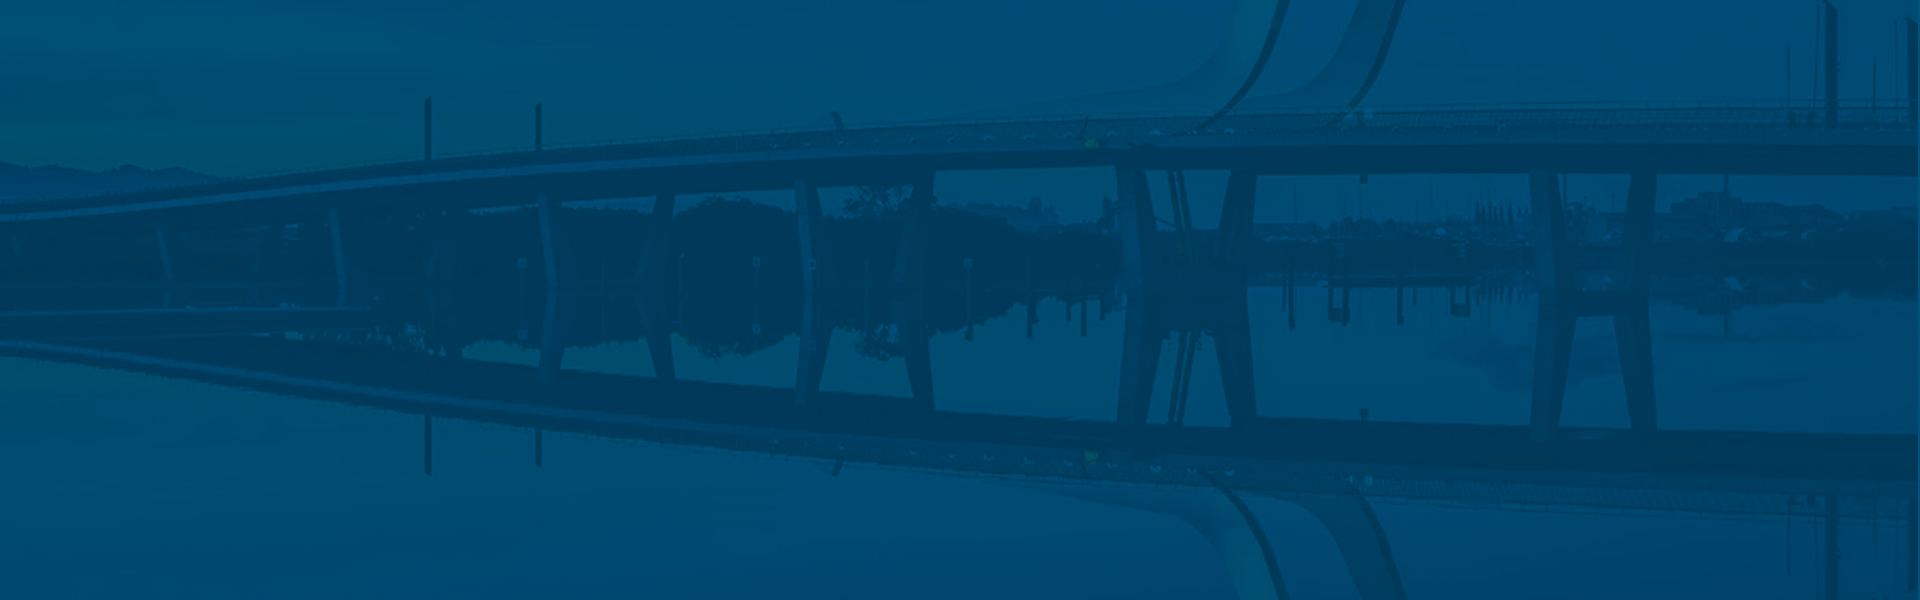 bridge with blue overlay